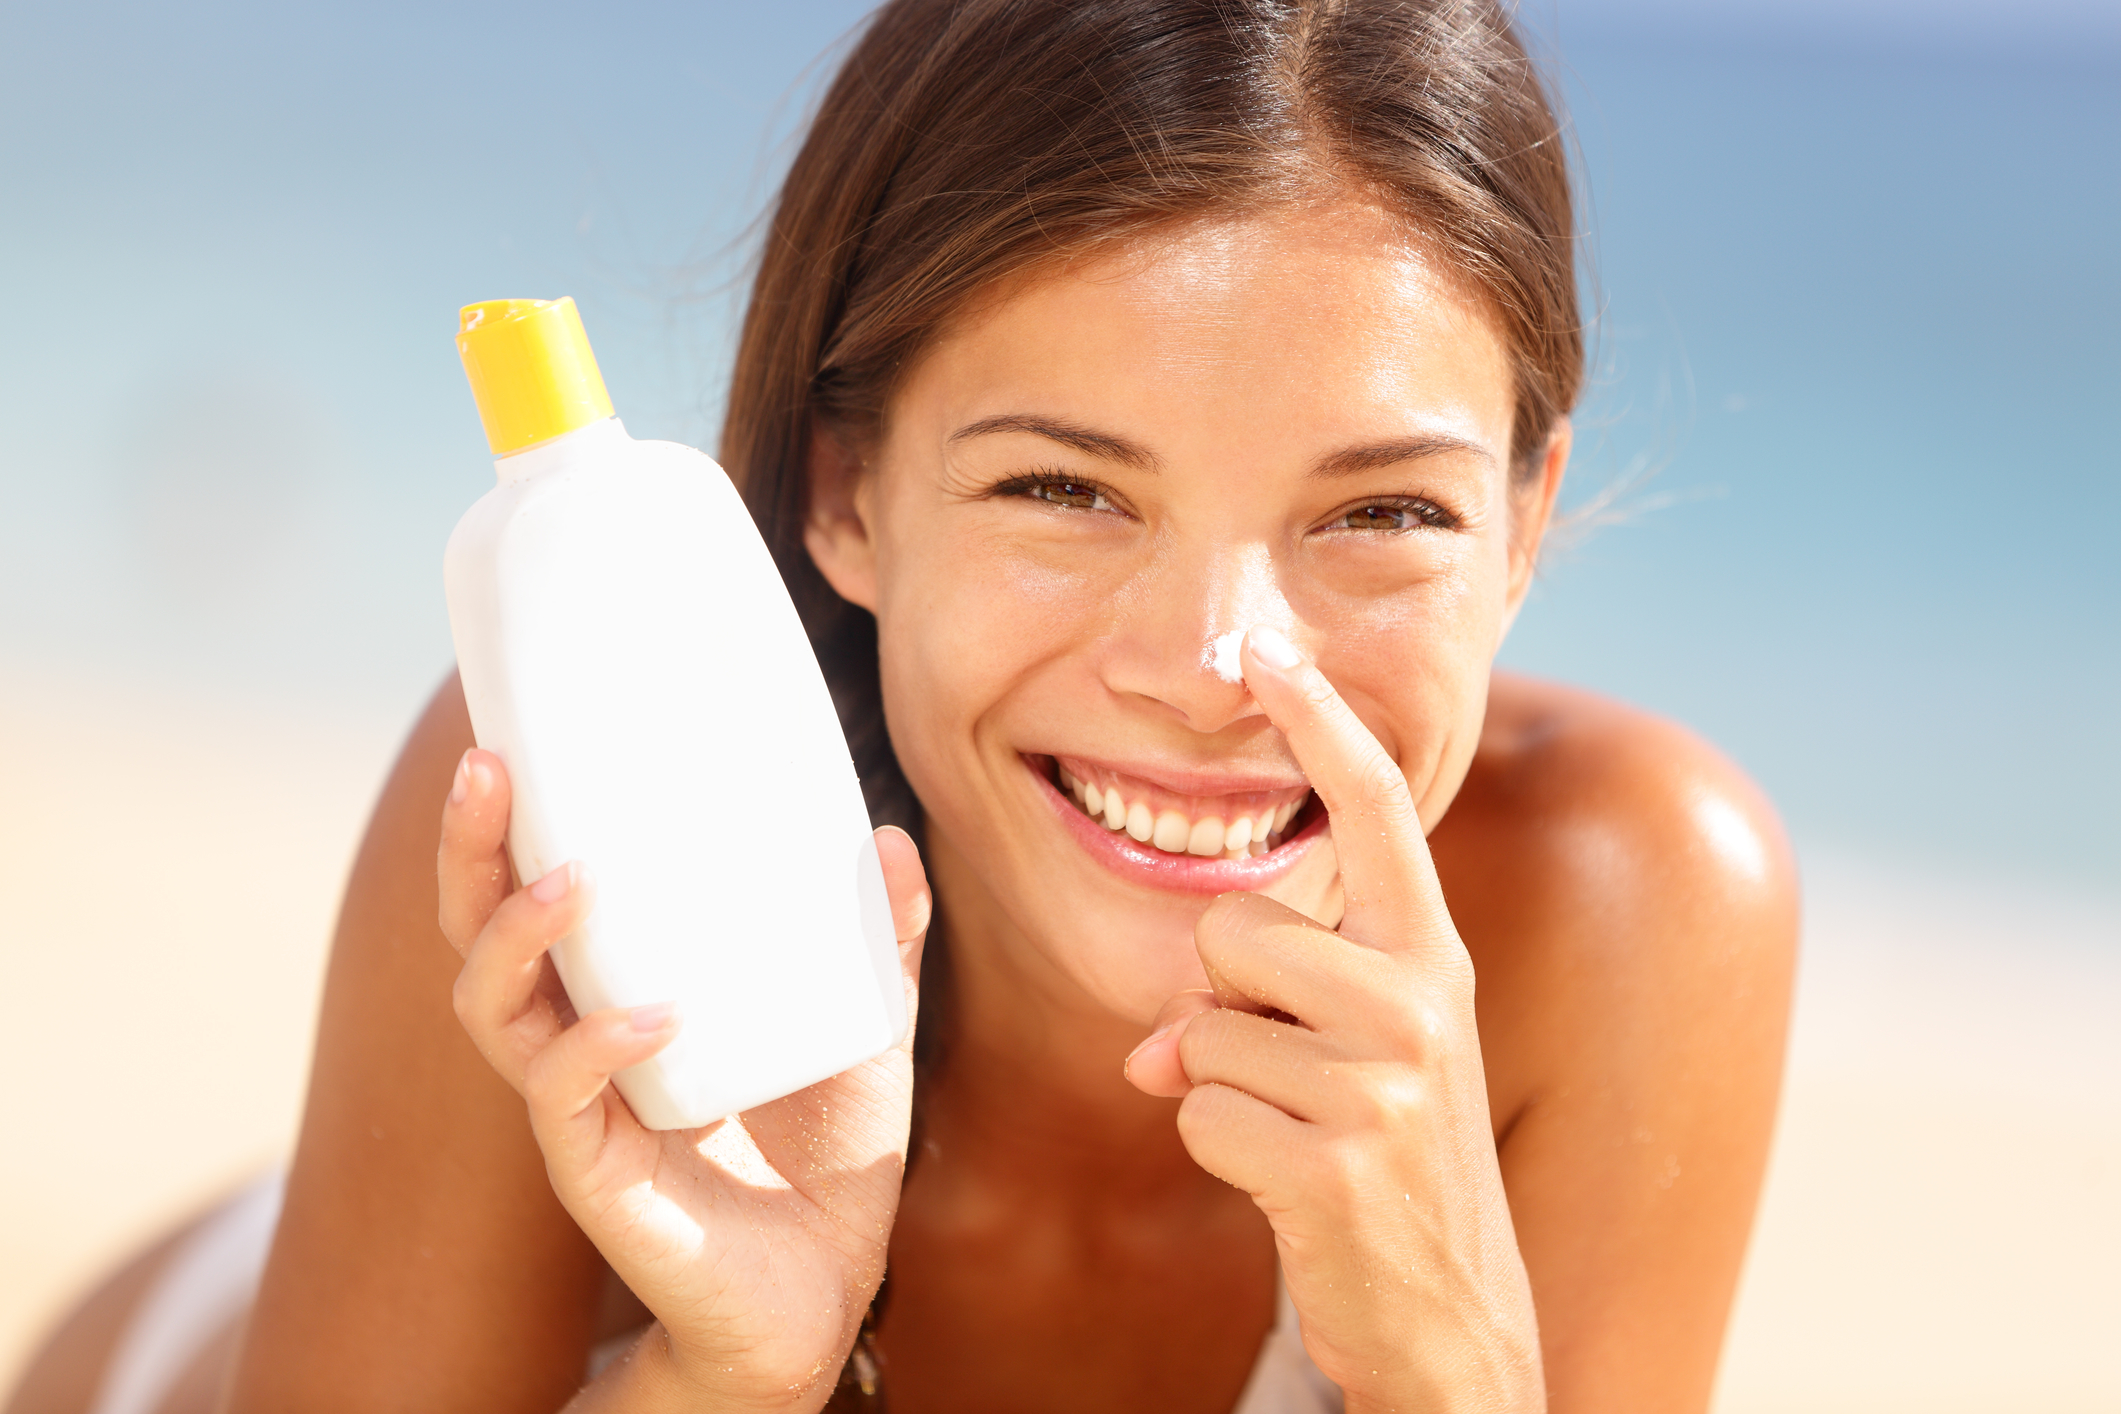 A smiling woman applying sunscreen